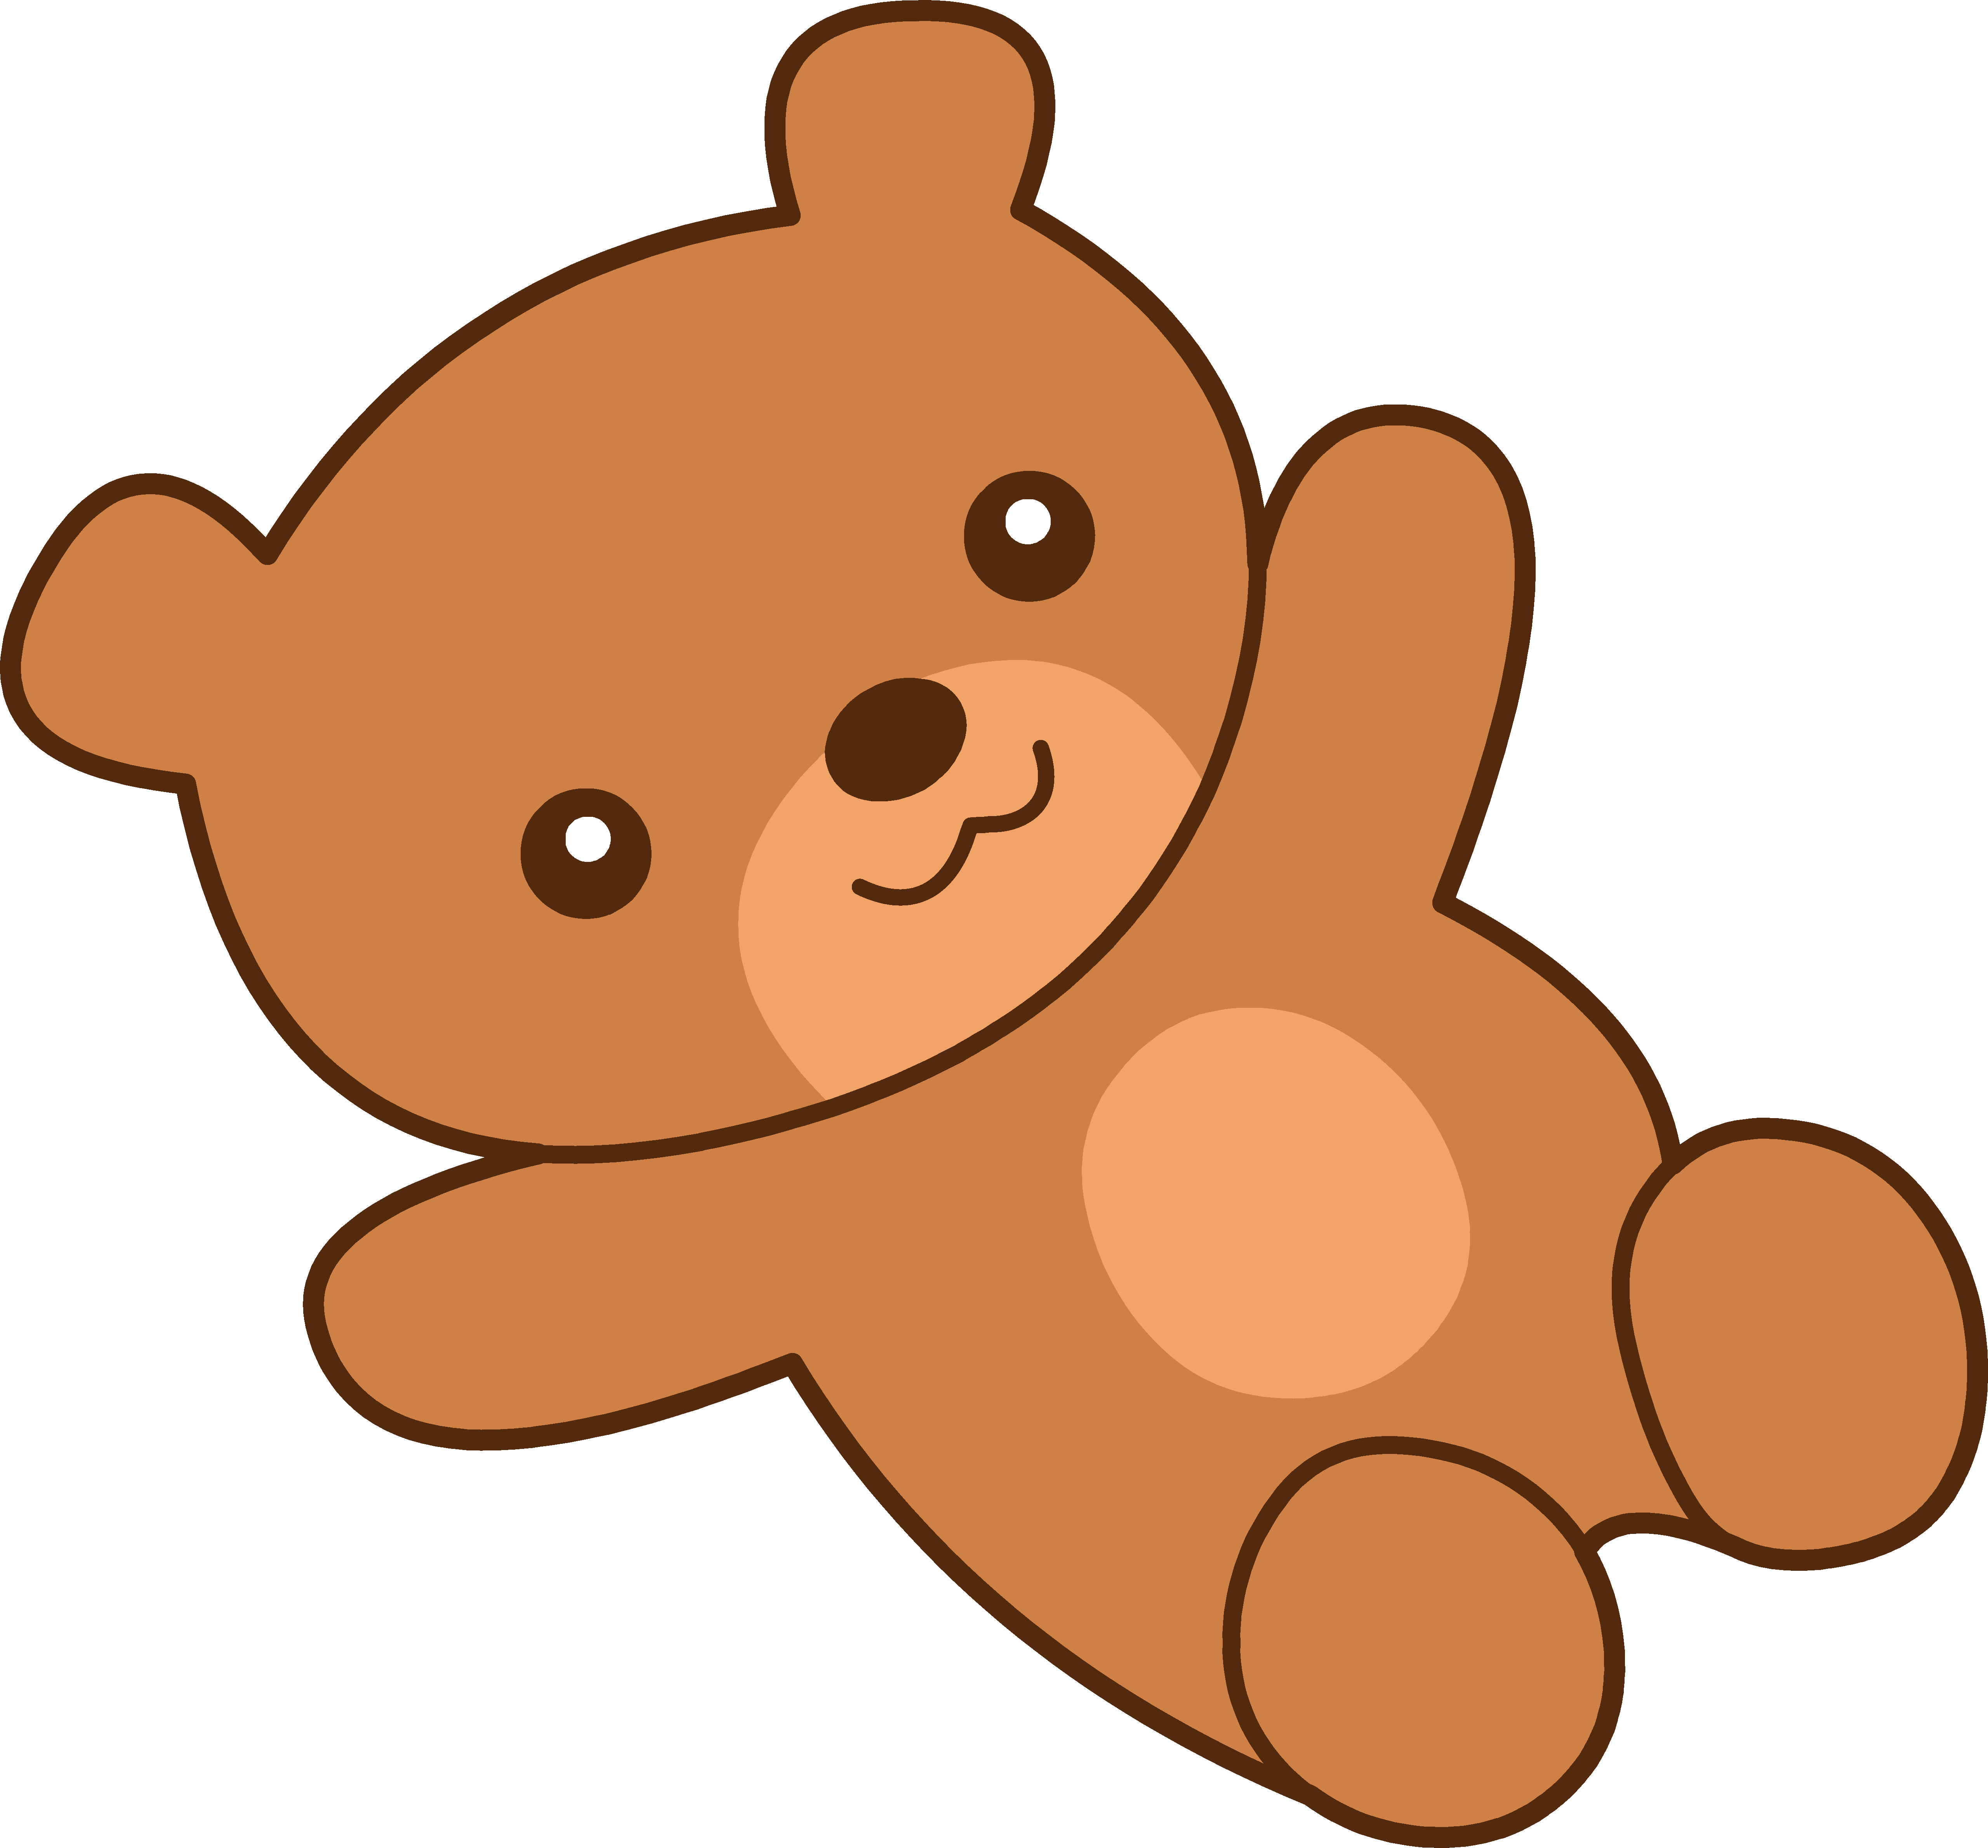 Cute brown teddy.